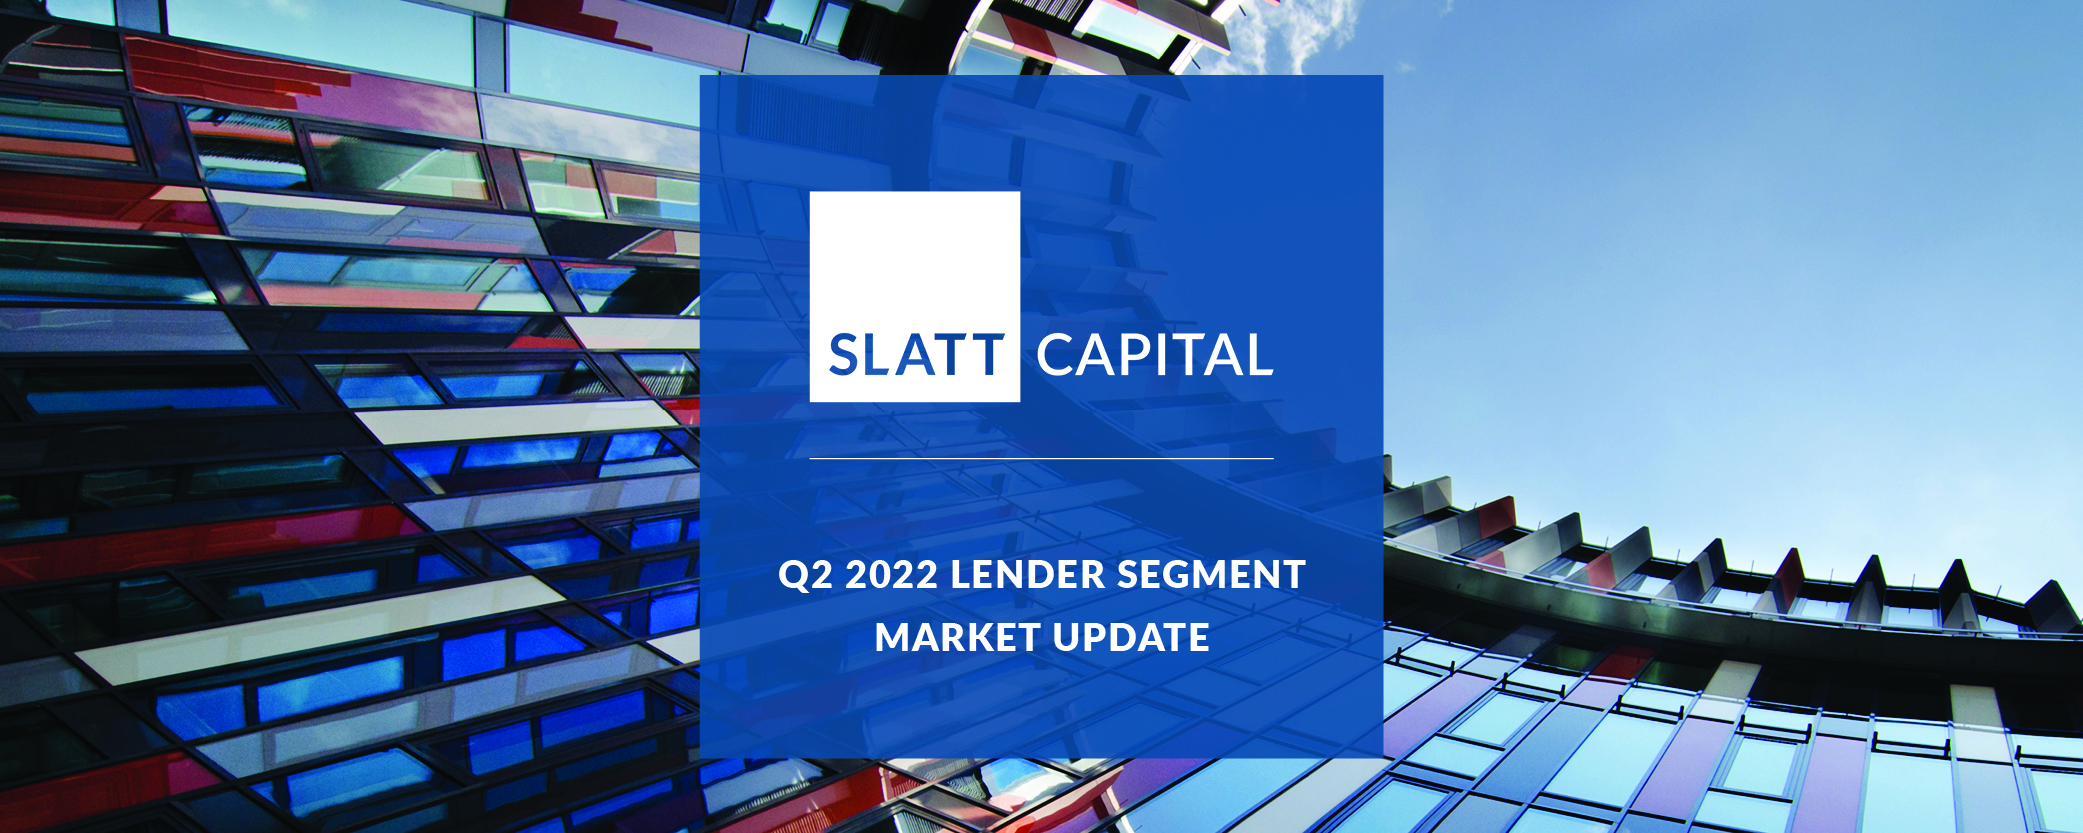 Q2 2022 lender segment market update